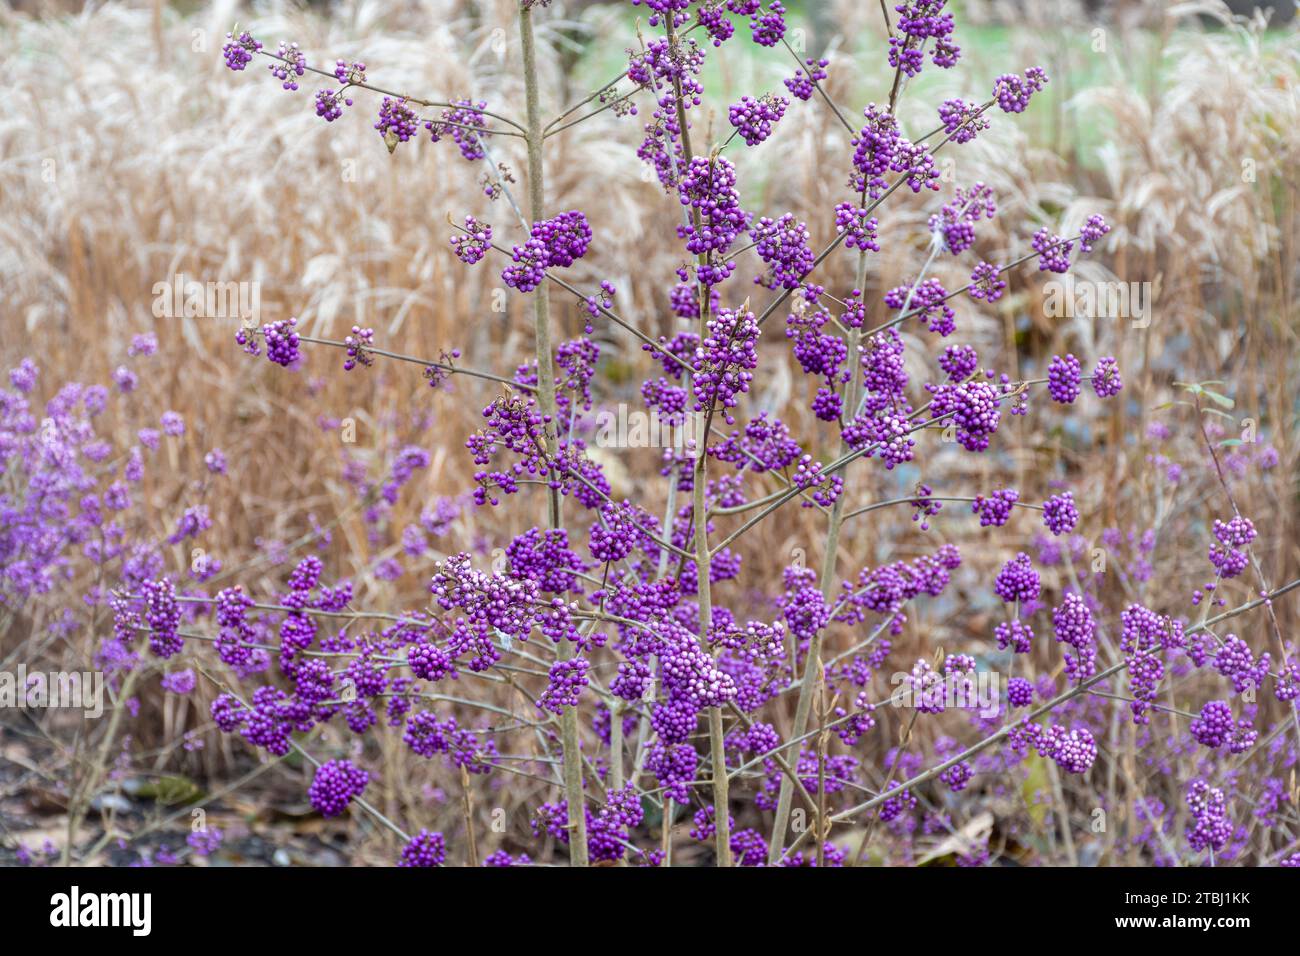 Purple berries of beauty berry Callicarpa bodinieri var. giraldii 'Profusion' in December or winter, UK Stock Photo